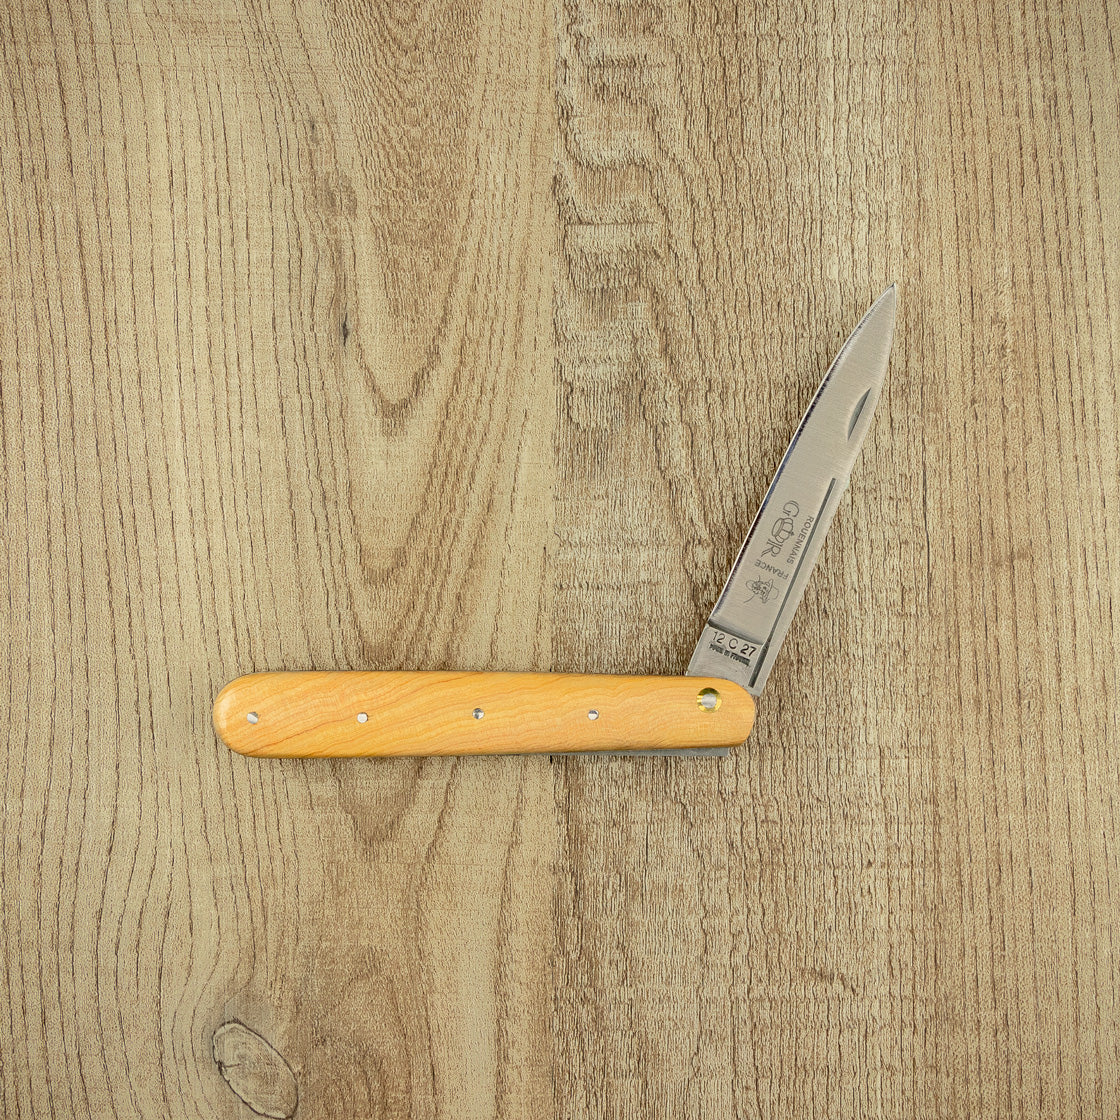 Thiers Issard Rouennais folding knife